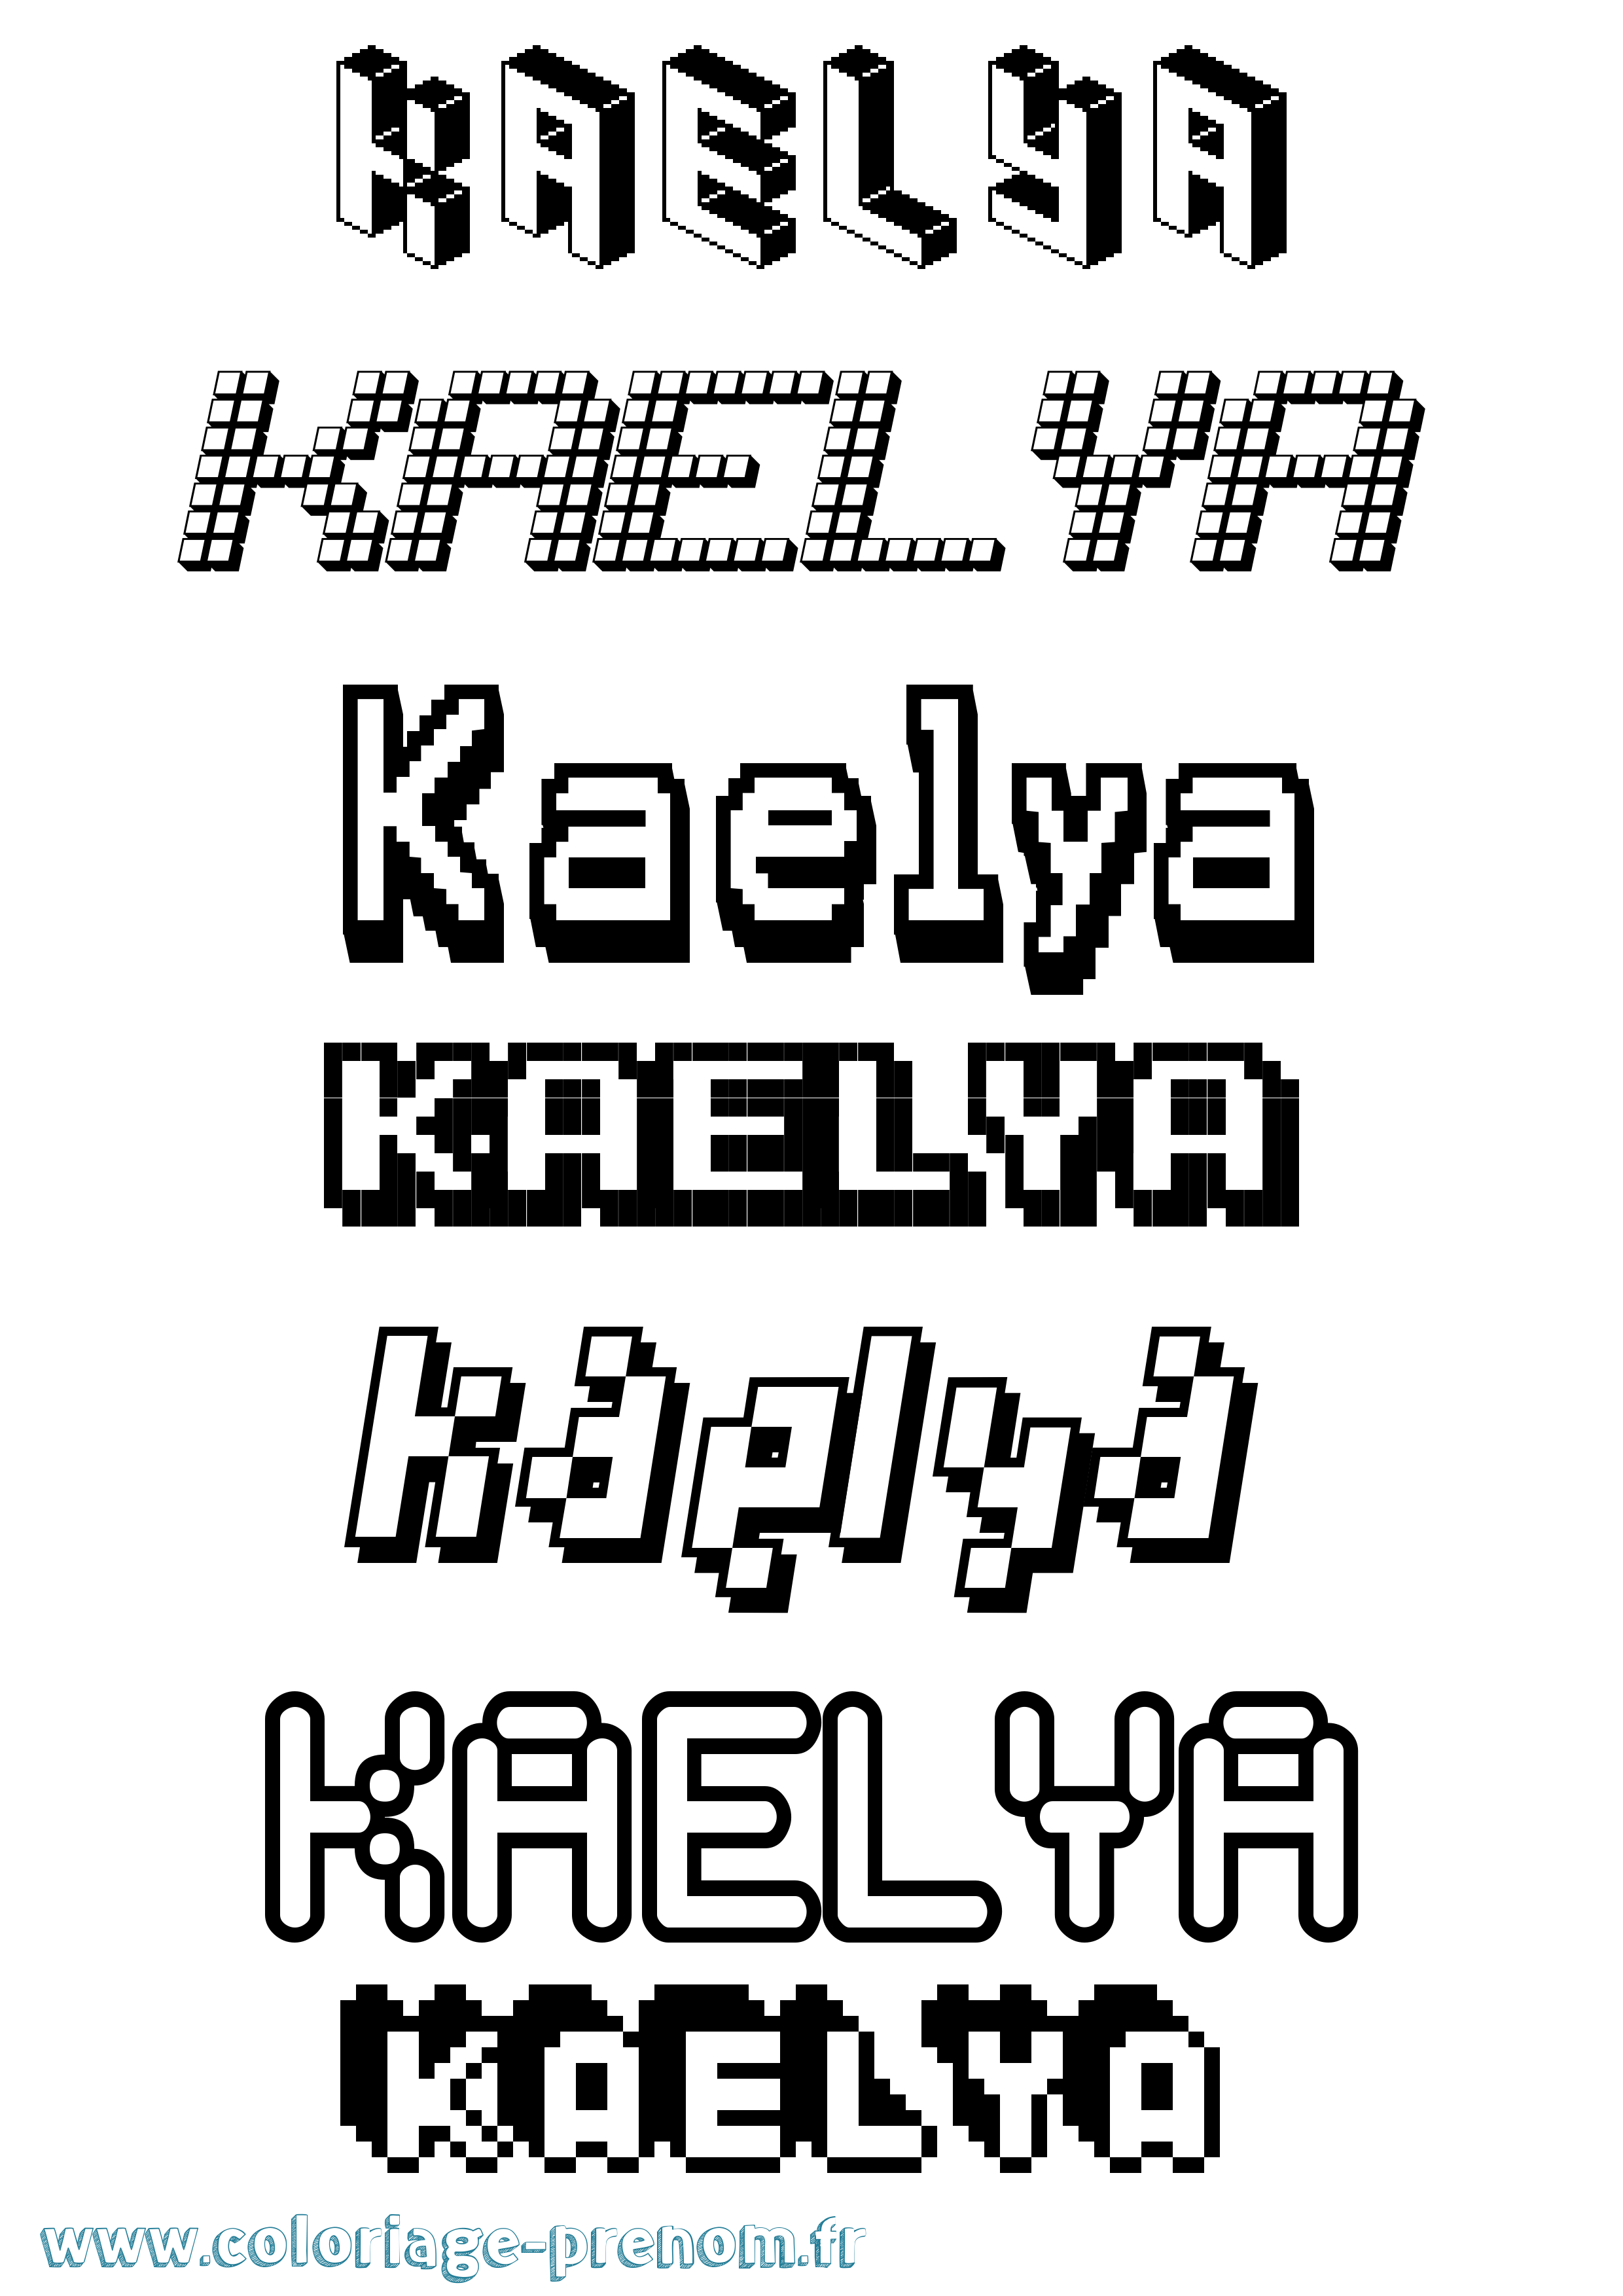 Coloriage prénom Kaelya Pixel